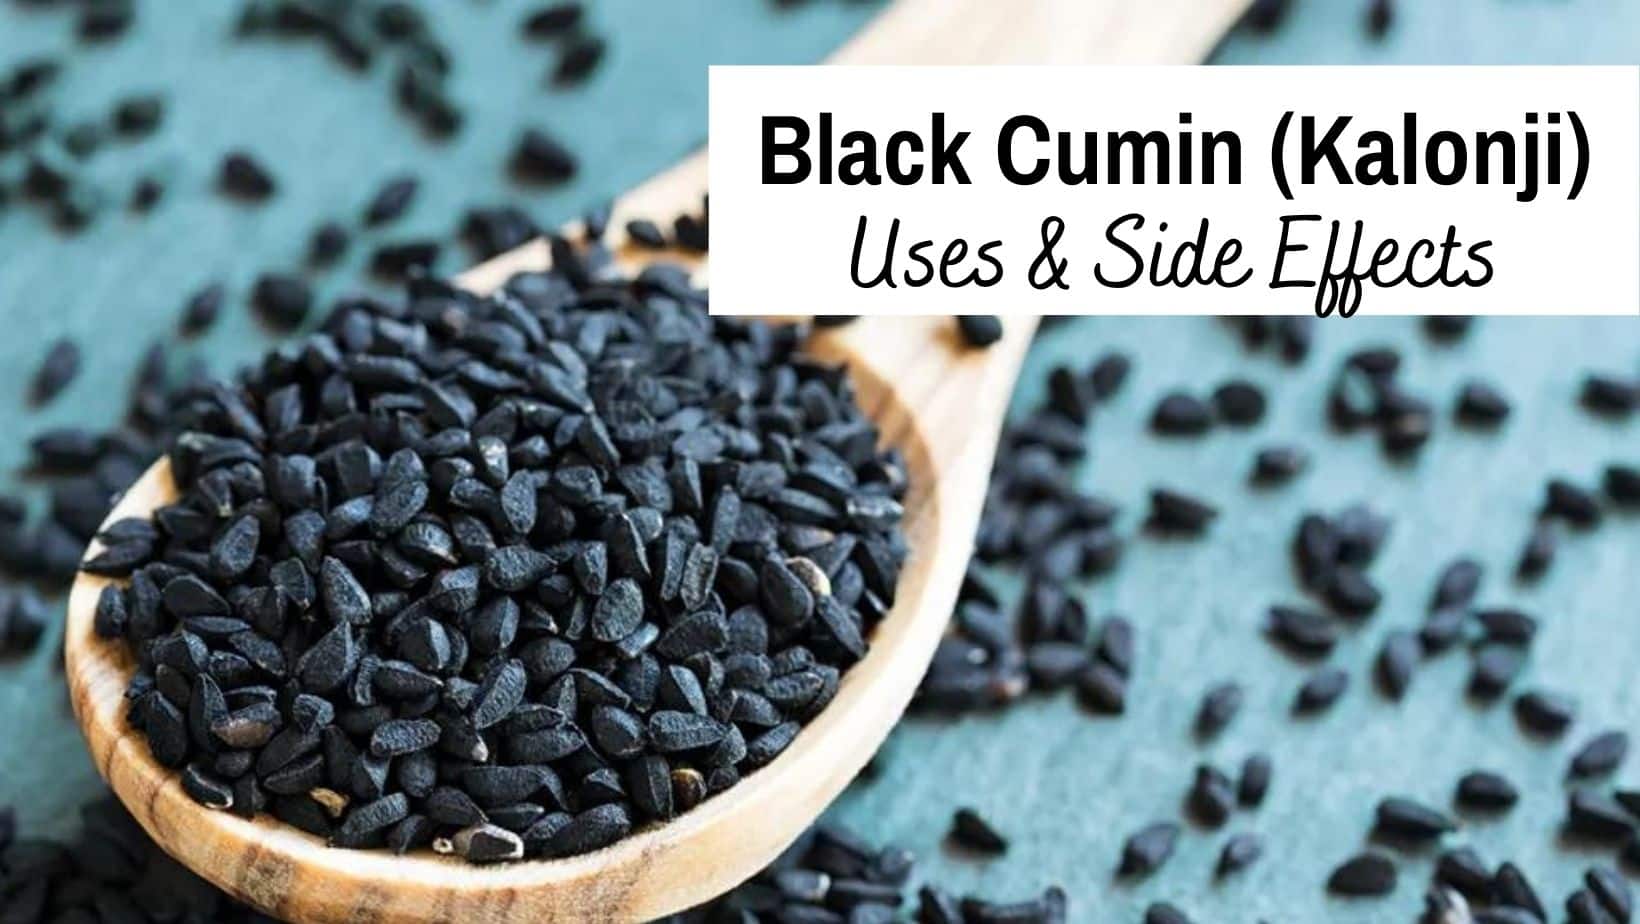 Black Cumin (Kalonji): Health Benefits, Uses, Side Effects And More |  